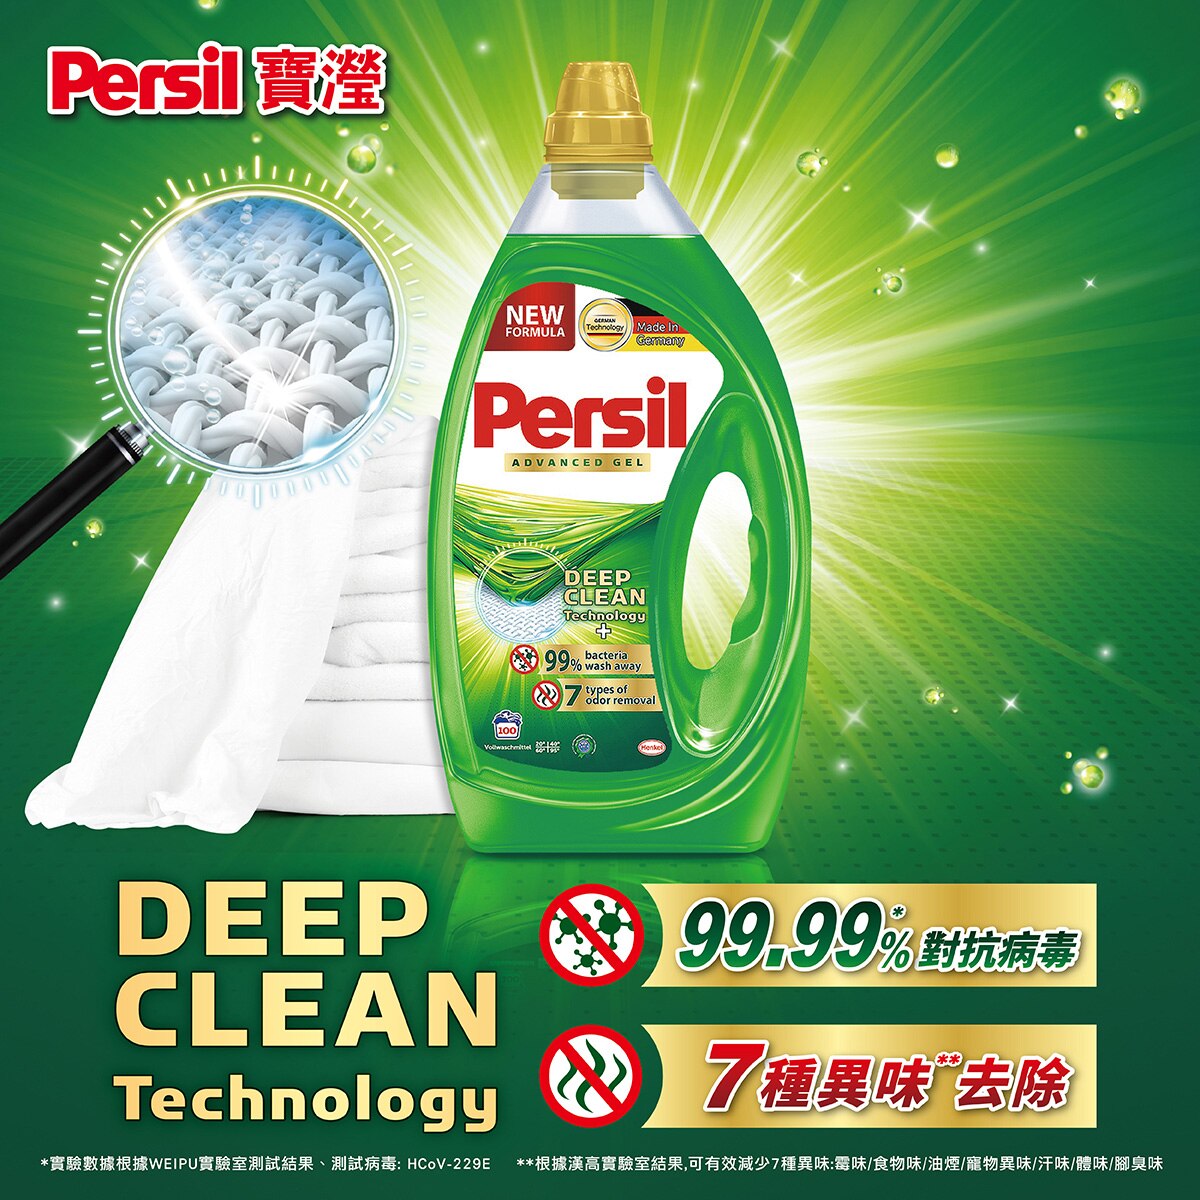 Persil 寶瀅4合1膠囊，4種功效: 強效淨垢，99%抗菌*，有效防螨，除臭護纖。